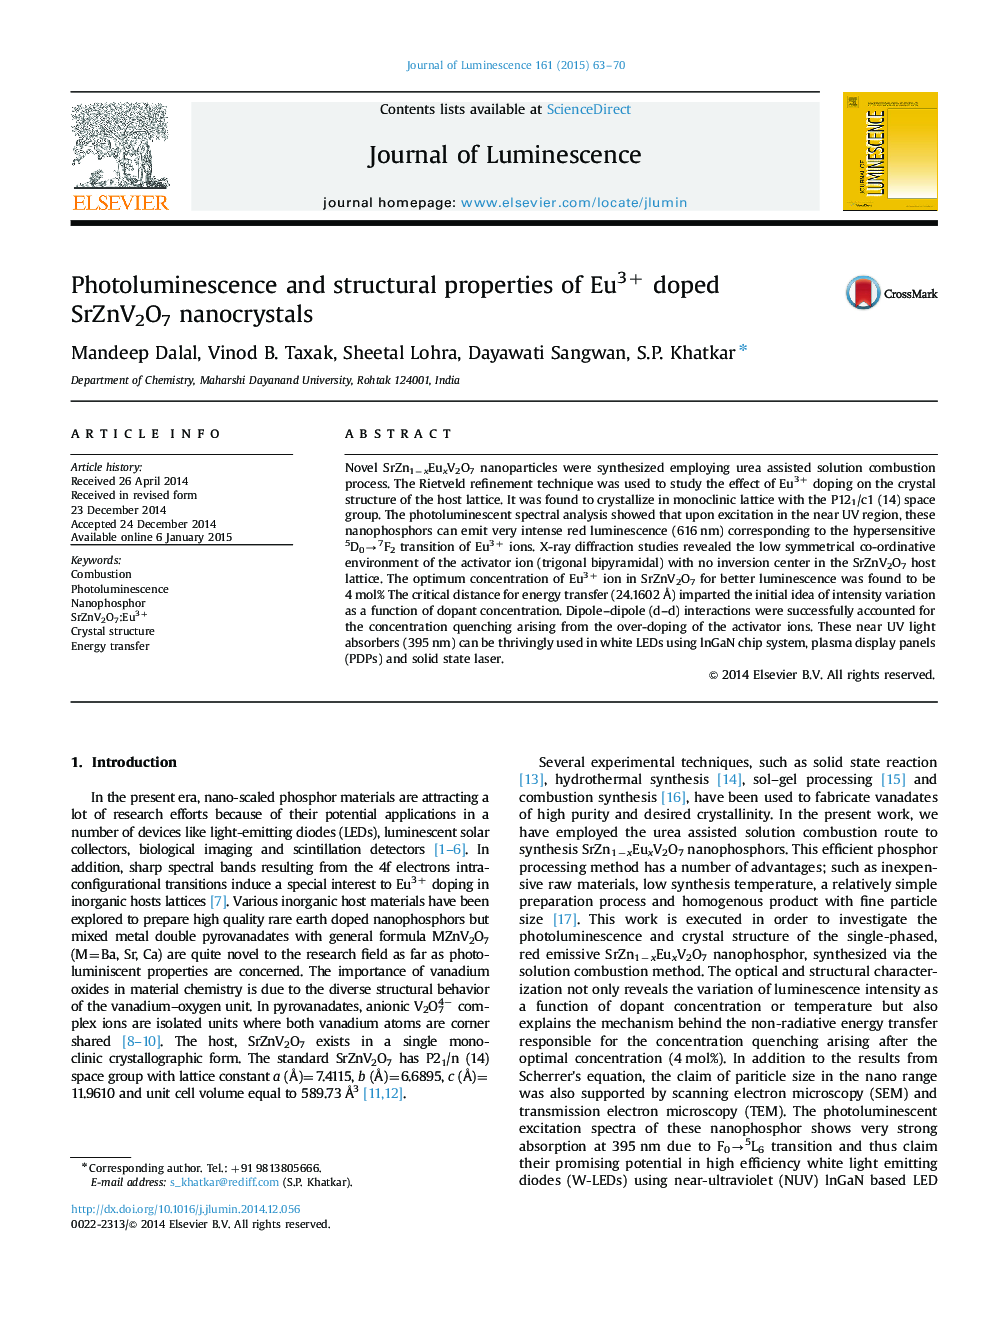 Photoluminescence and structural properties of Eu3+ doped SrZnV2O7 nanocrystals